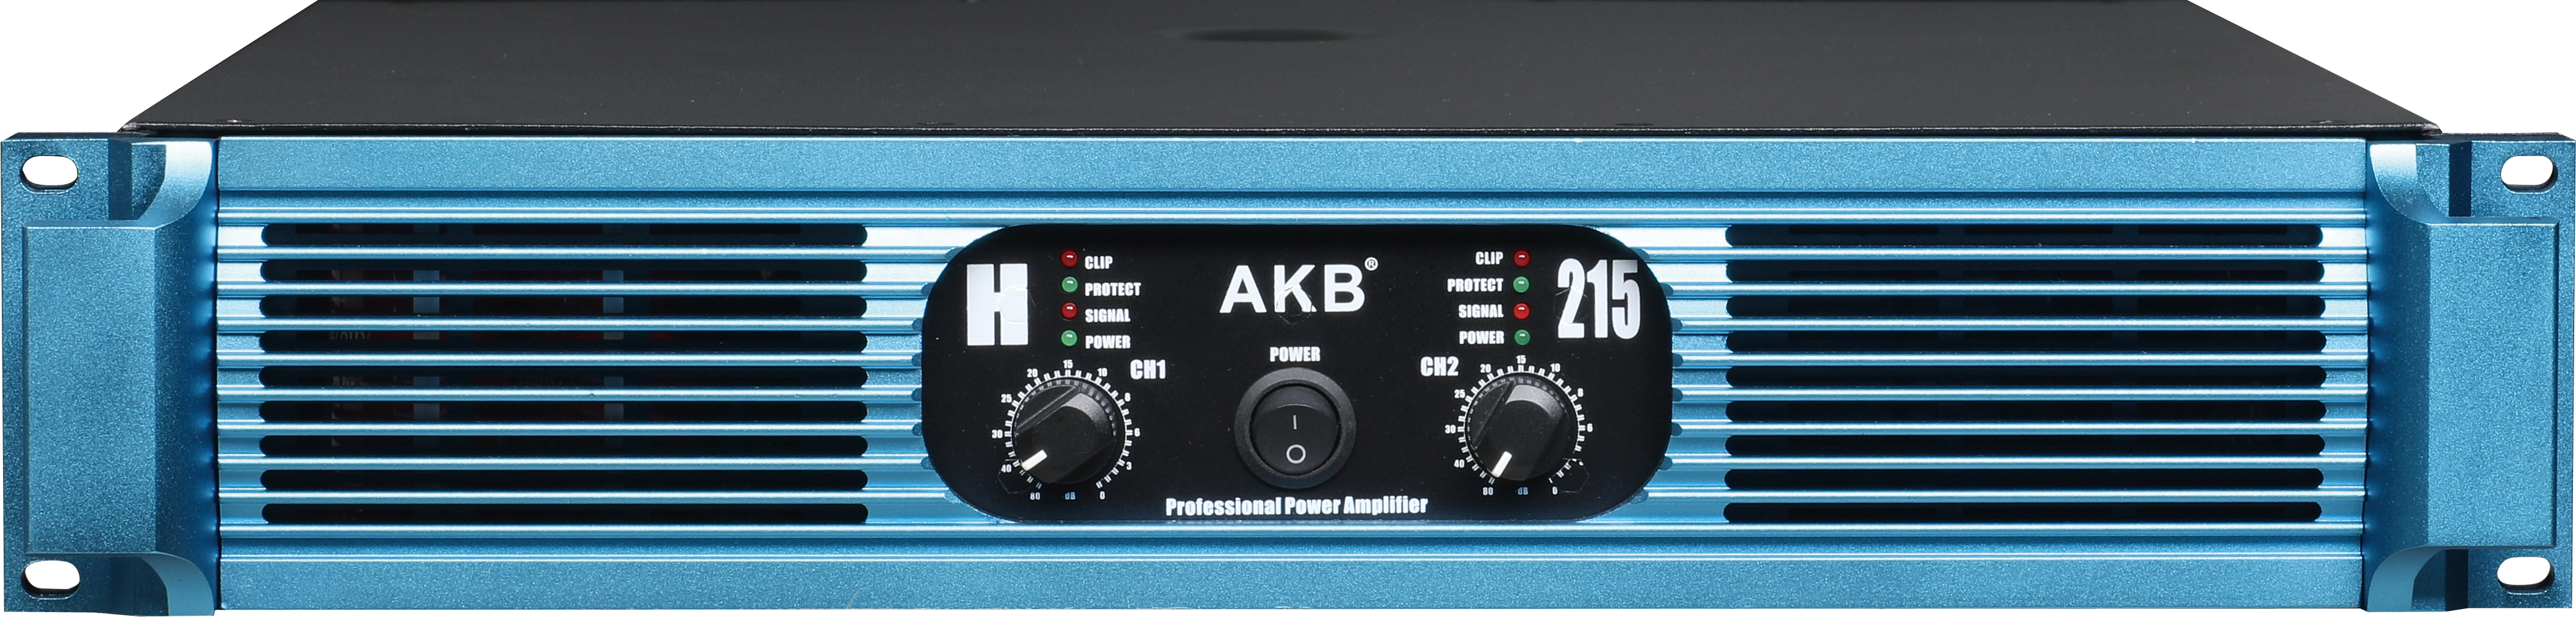 H series power amplifier